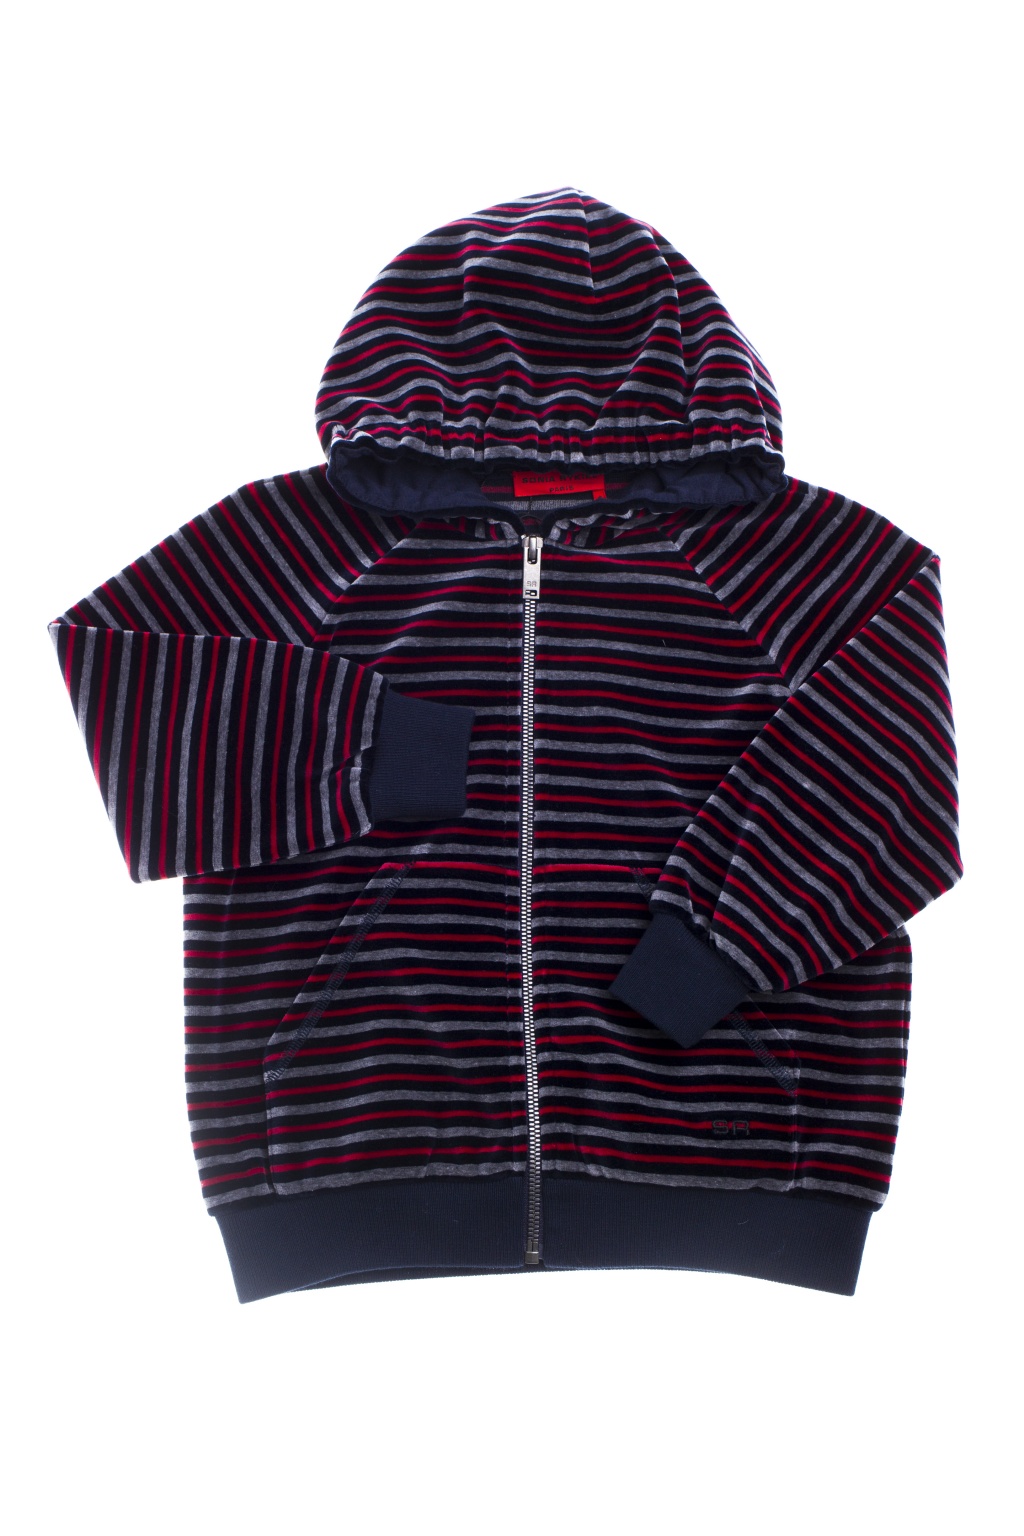 Navy blue Hooded Striped Sweatshirt Sonia Rykiel Kids - Vitkac France